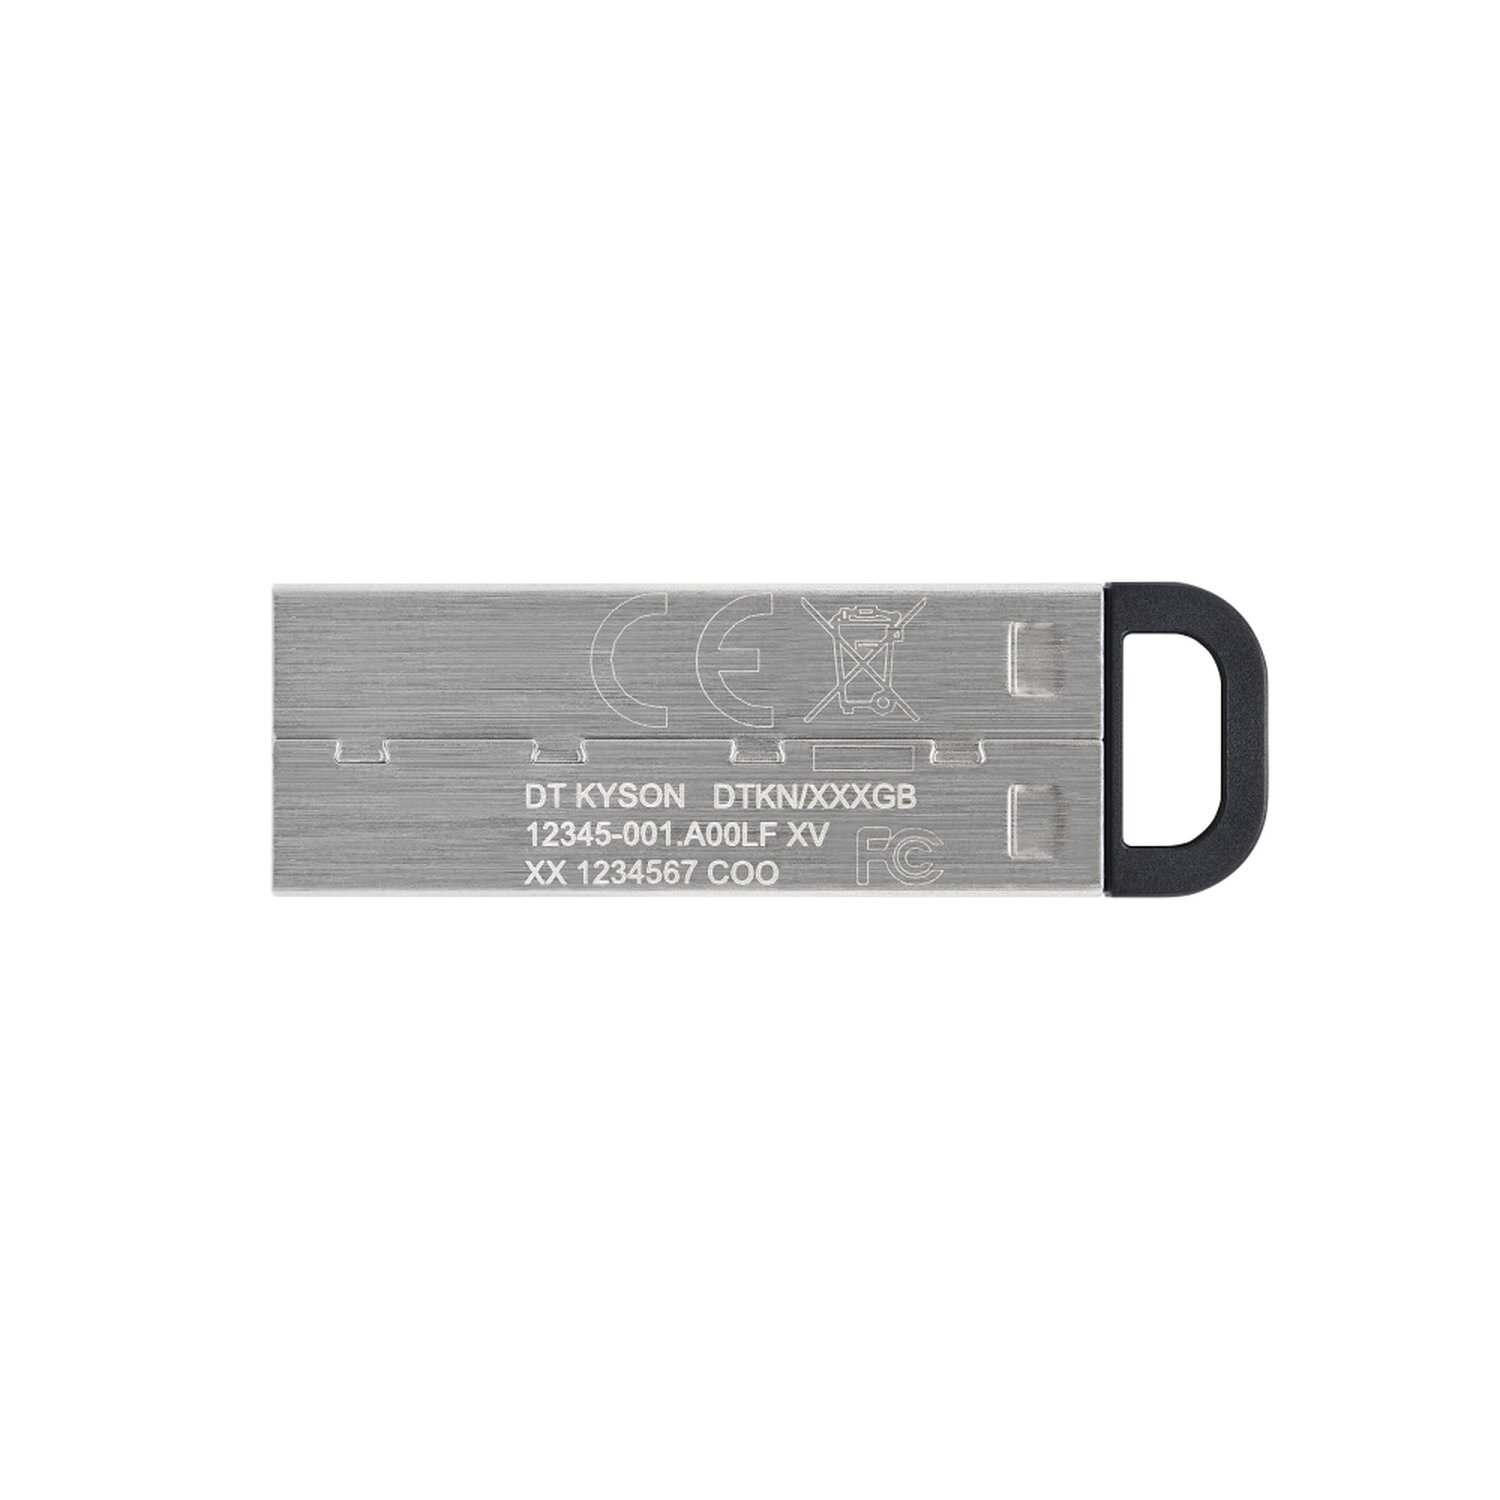 DT GB Pendrive (Schwarz, GB) KINGSTON Stick 128 USB 128